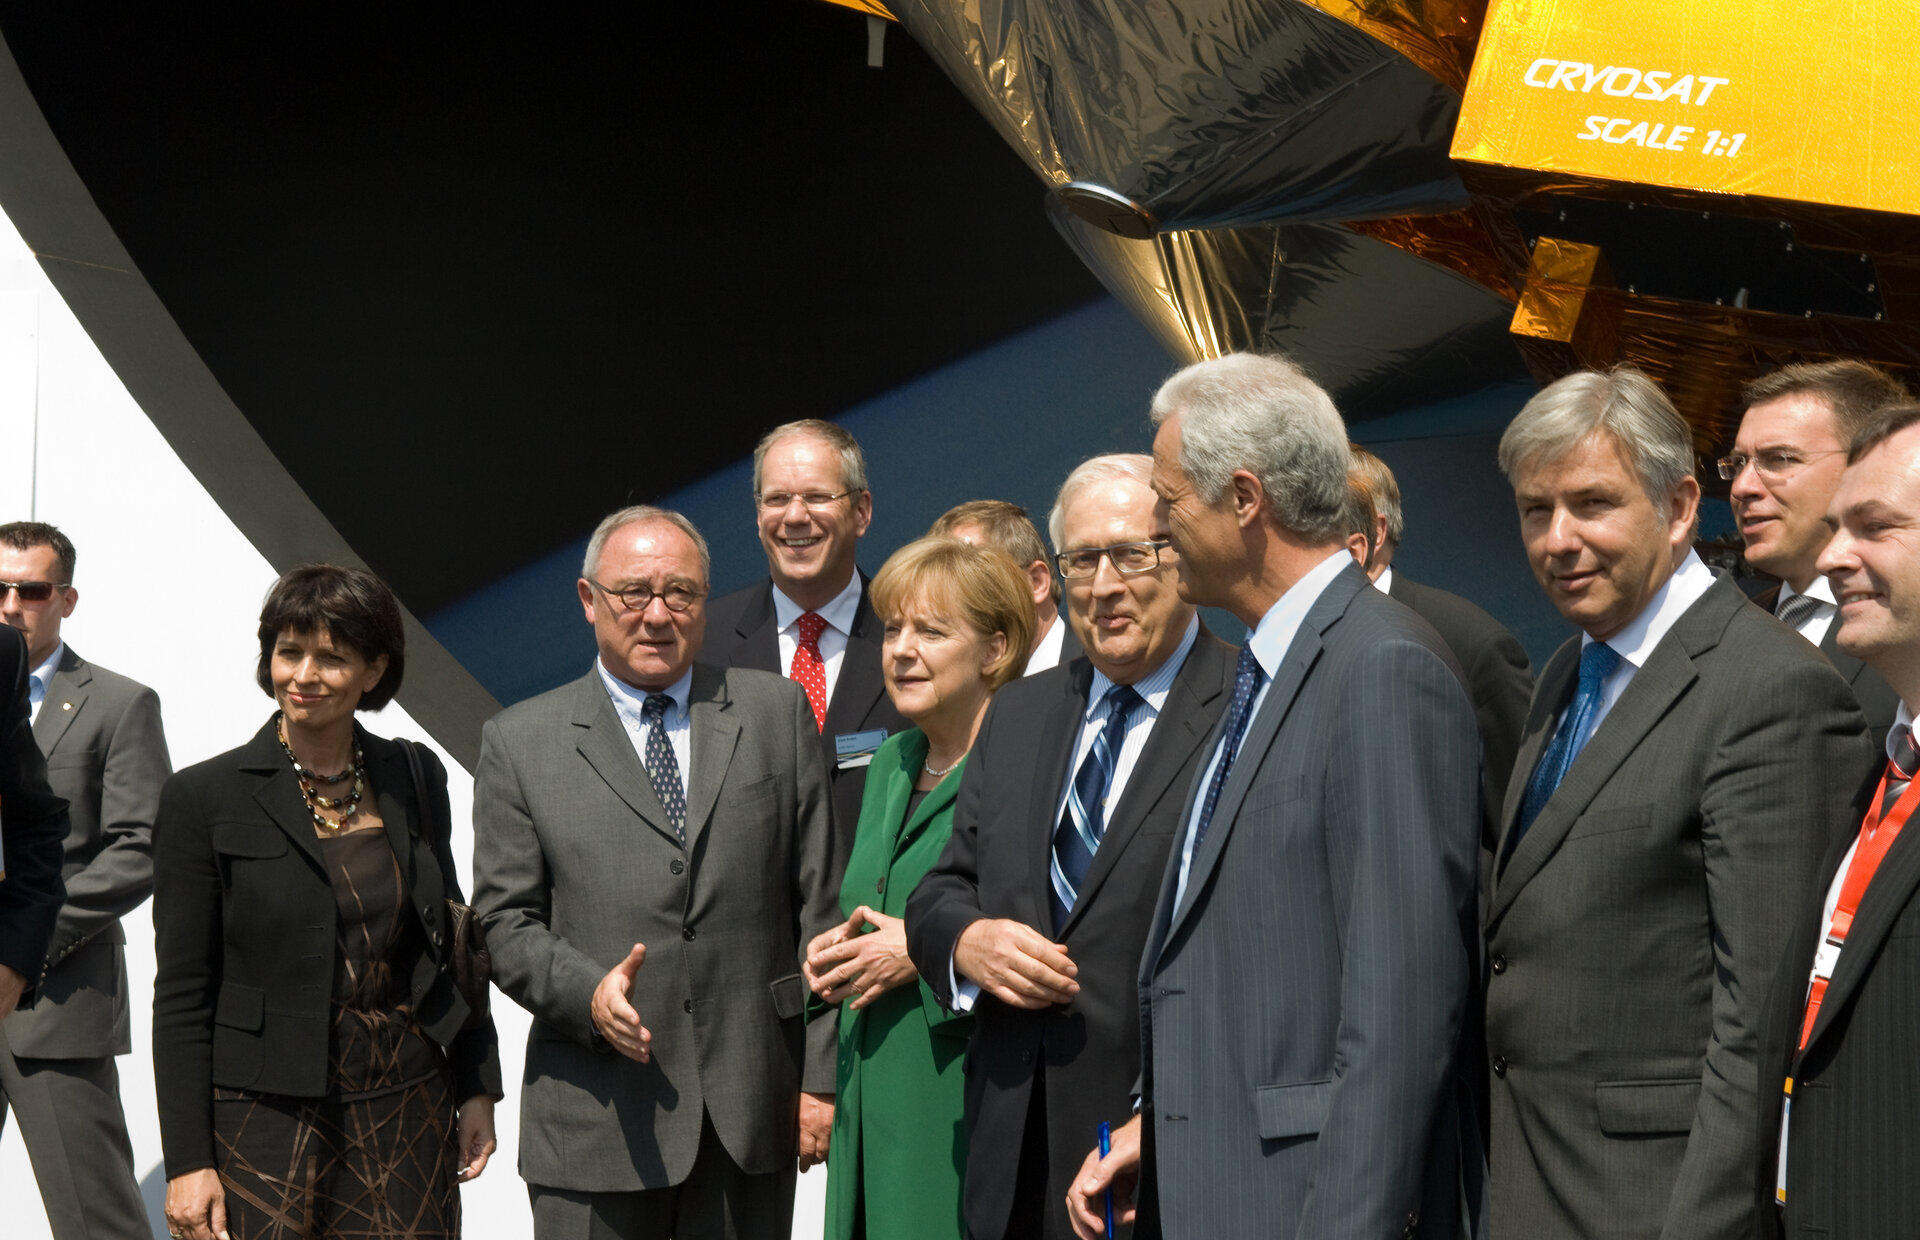 Visit of the German Chancellor Angela Merkel